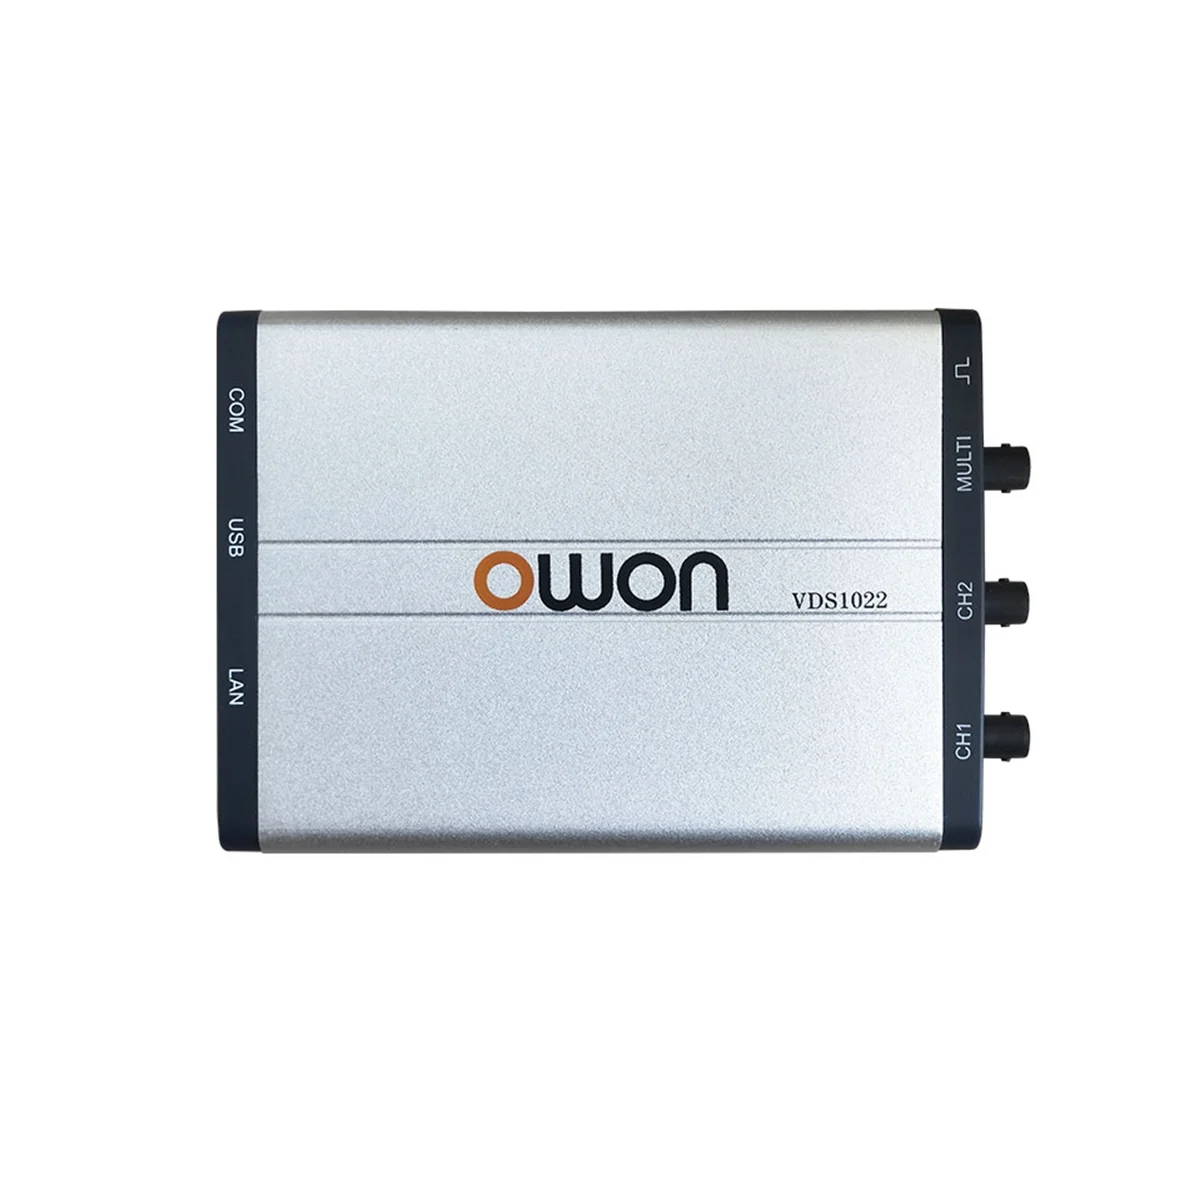 

Owon VDS1022 Digital Oscilloscope 100Msa/S 25Mhz Bandwidth Handheld Portable PC USB Oscilloscopes